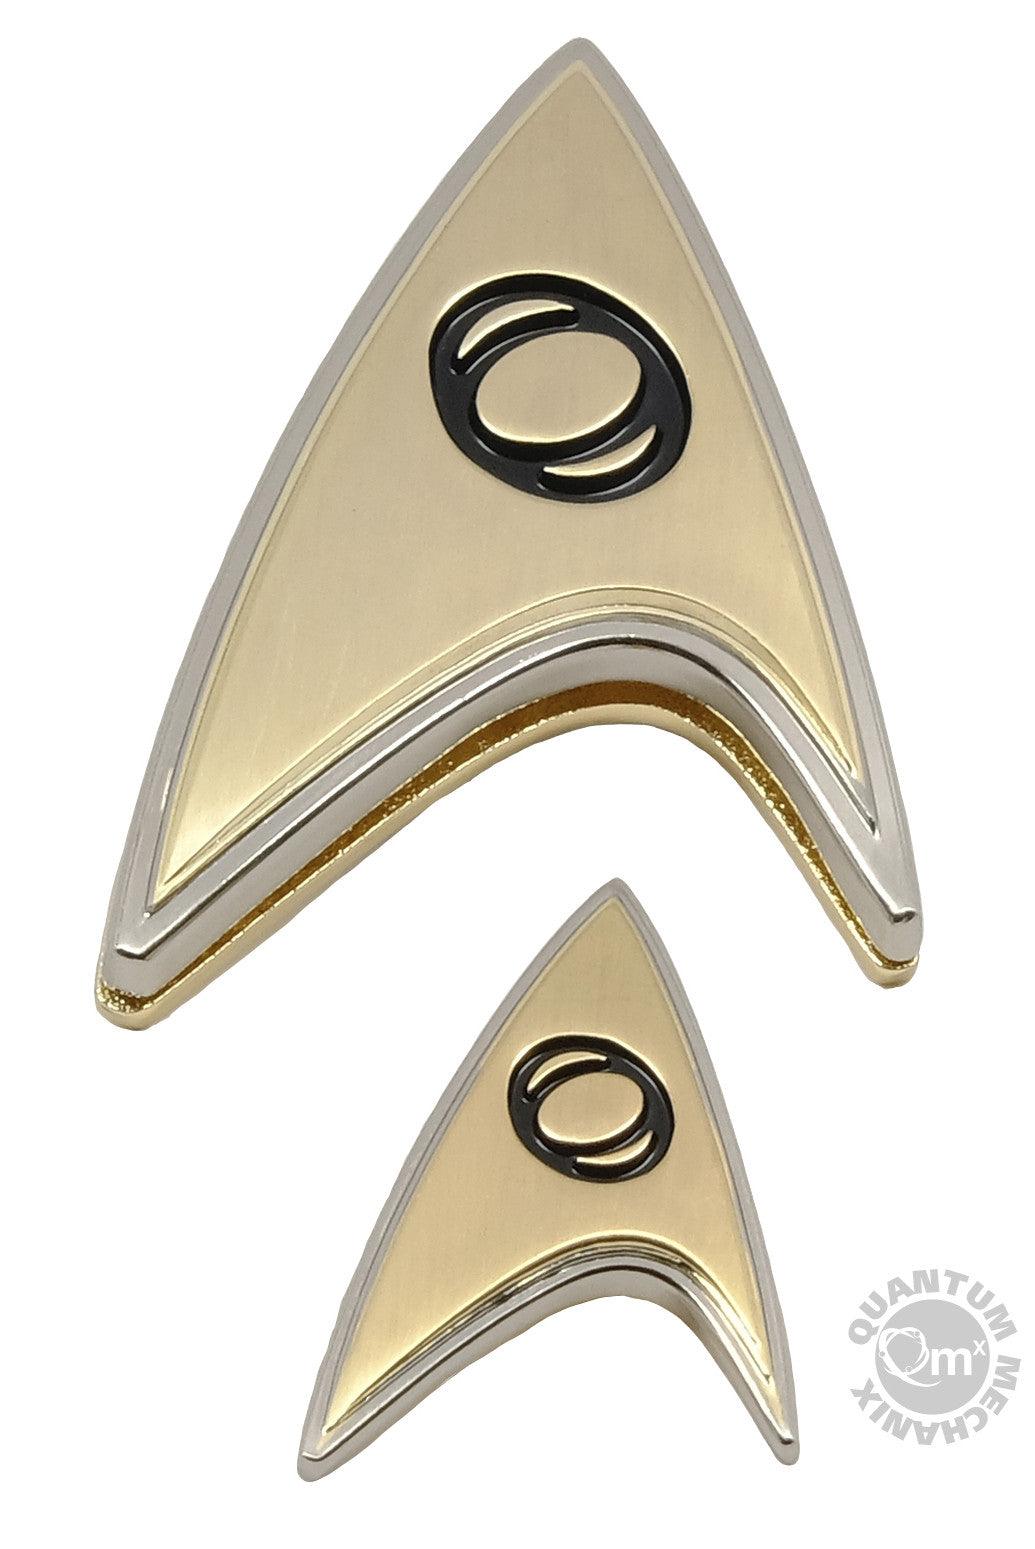 VR-95253 Star Trek Discovery Enterprise Badge and Pin Set Science - Quantum Mechanix - Titan Pop Culture